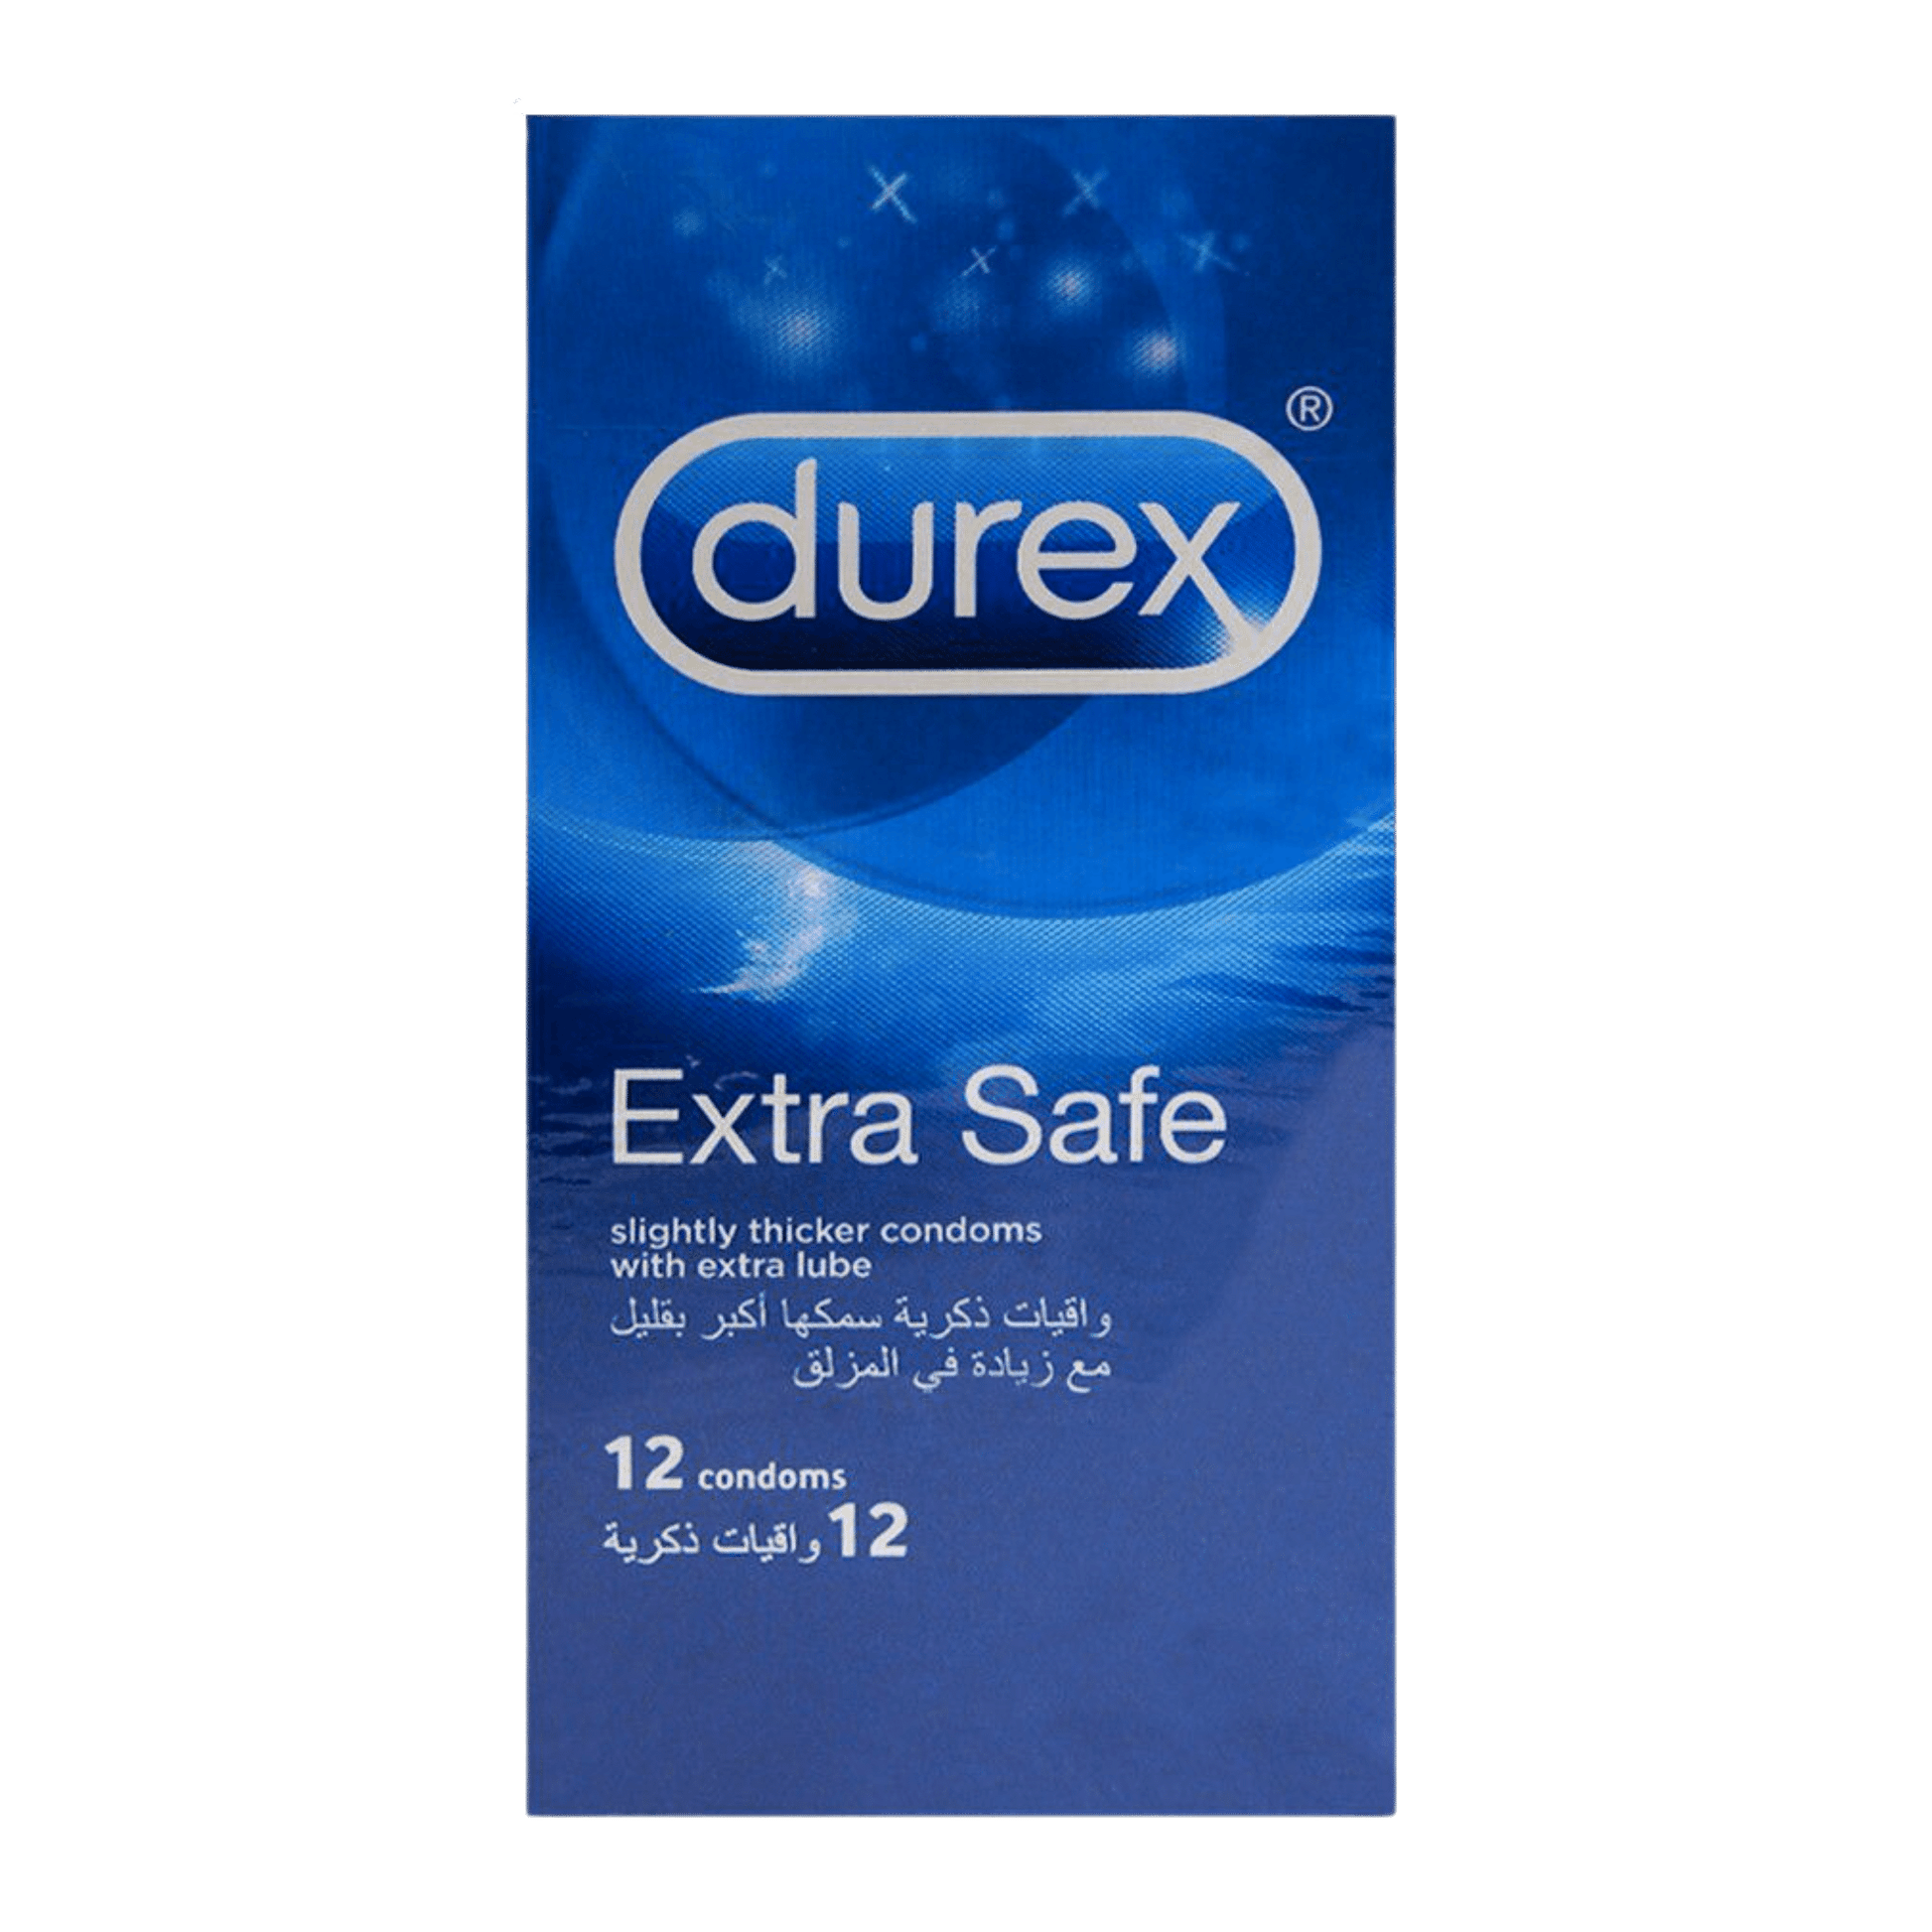 Durex Extra Safe 12 condoms in pakistan